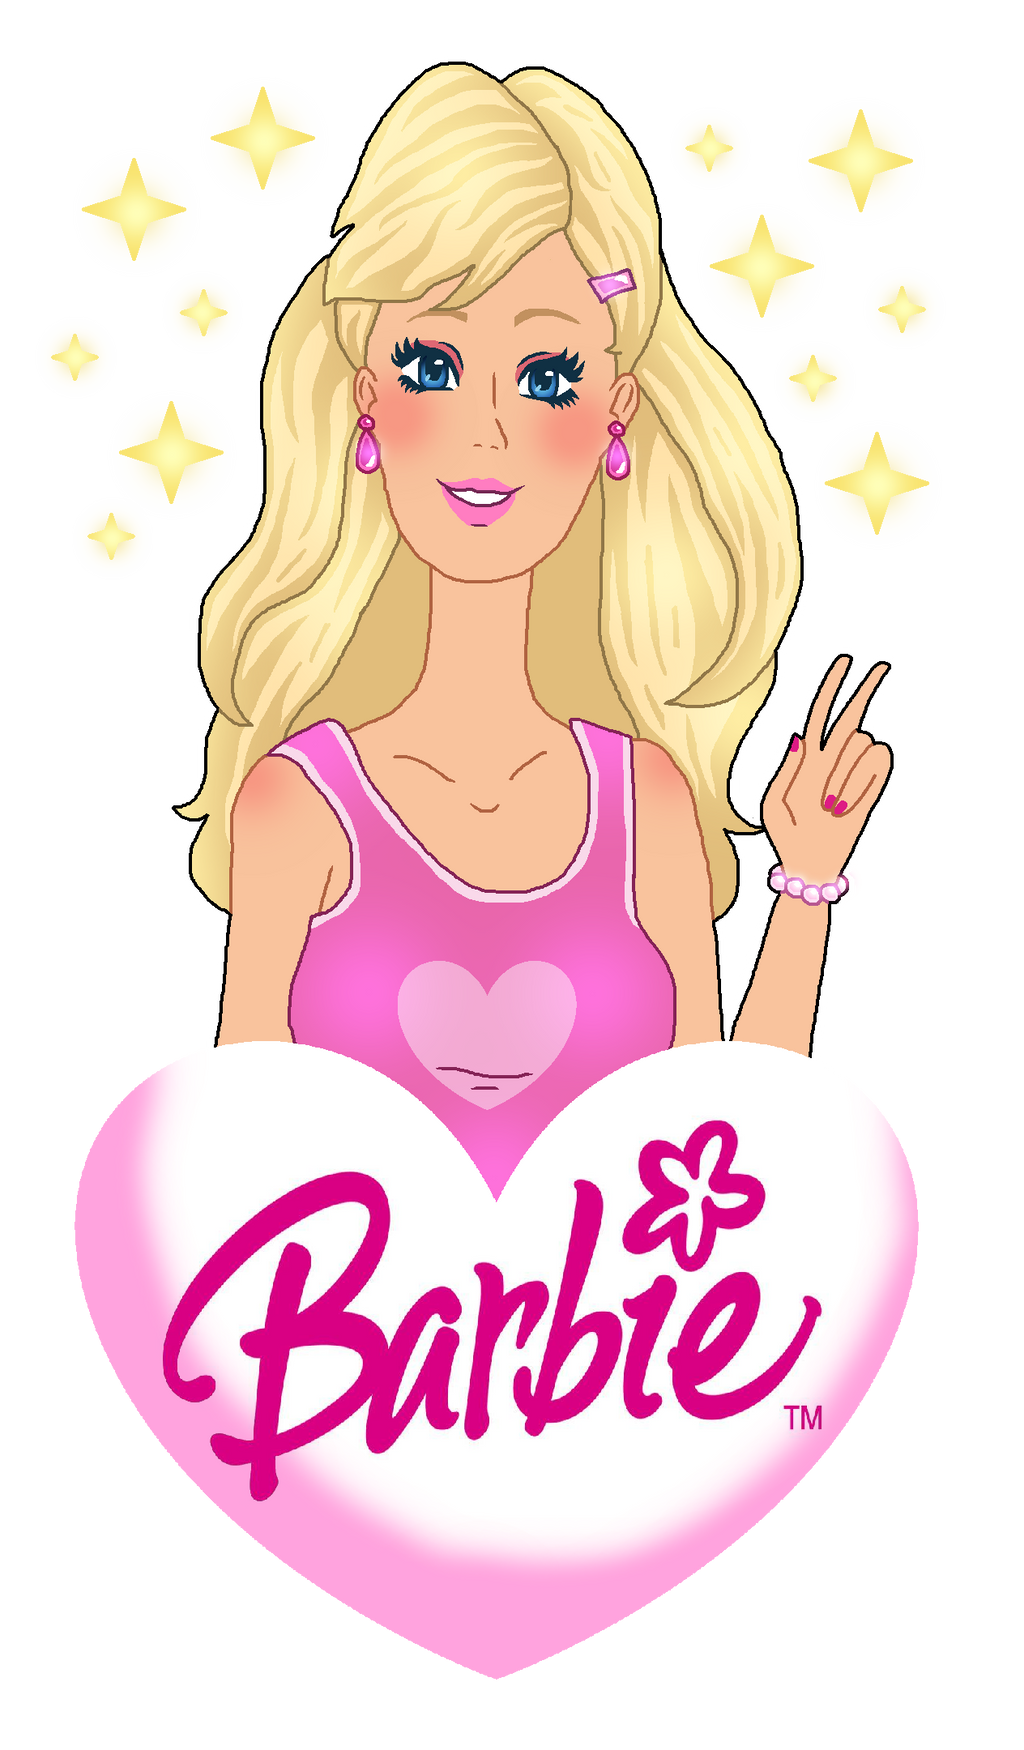 I'm a Barbie Girl! by sparklestar12 on DeviantArt